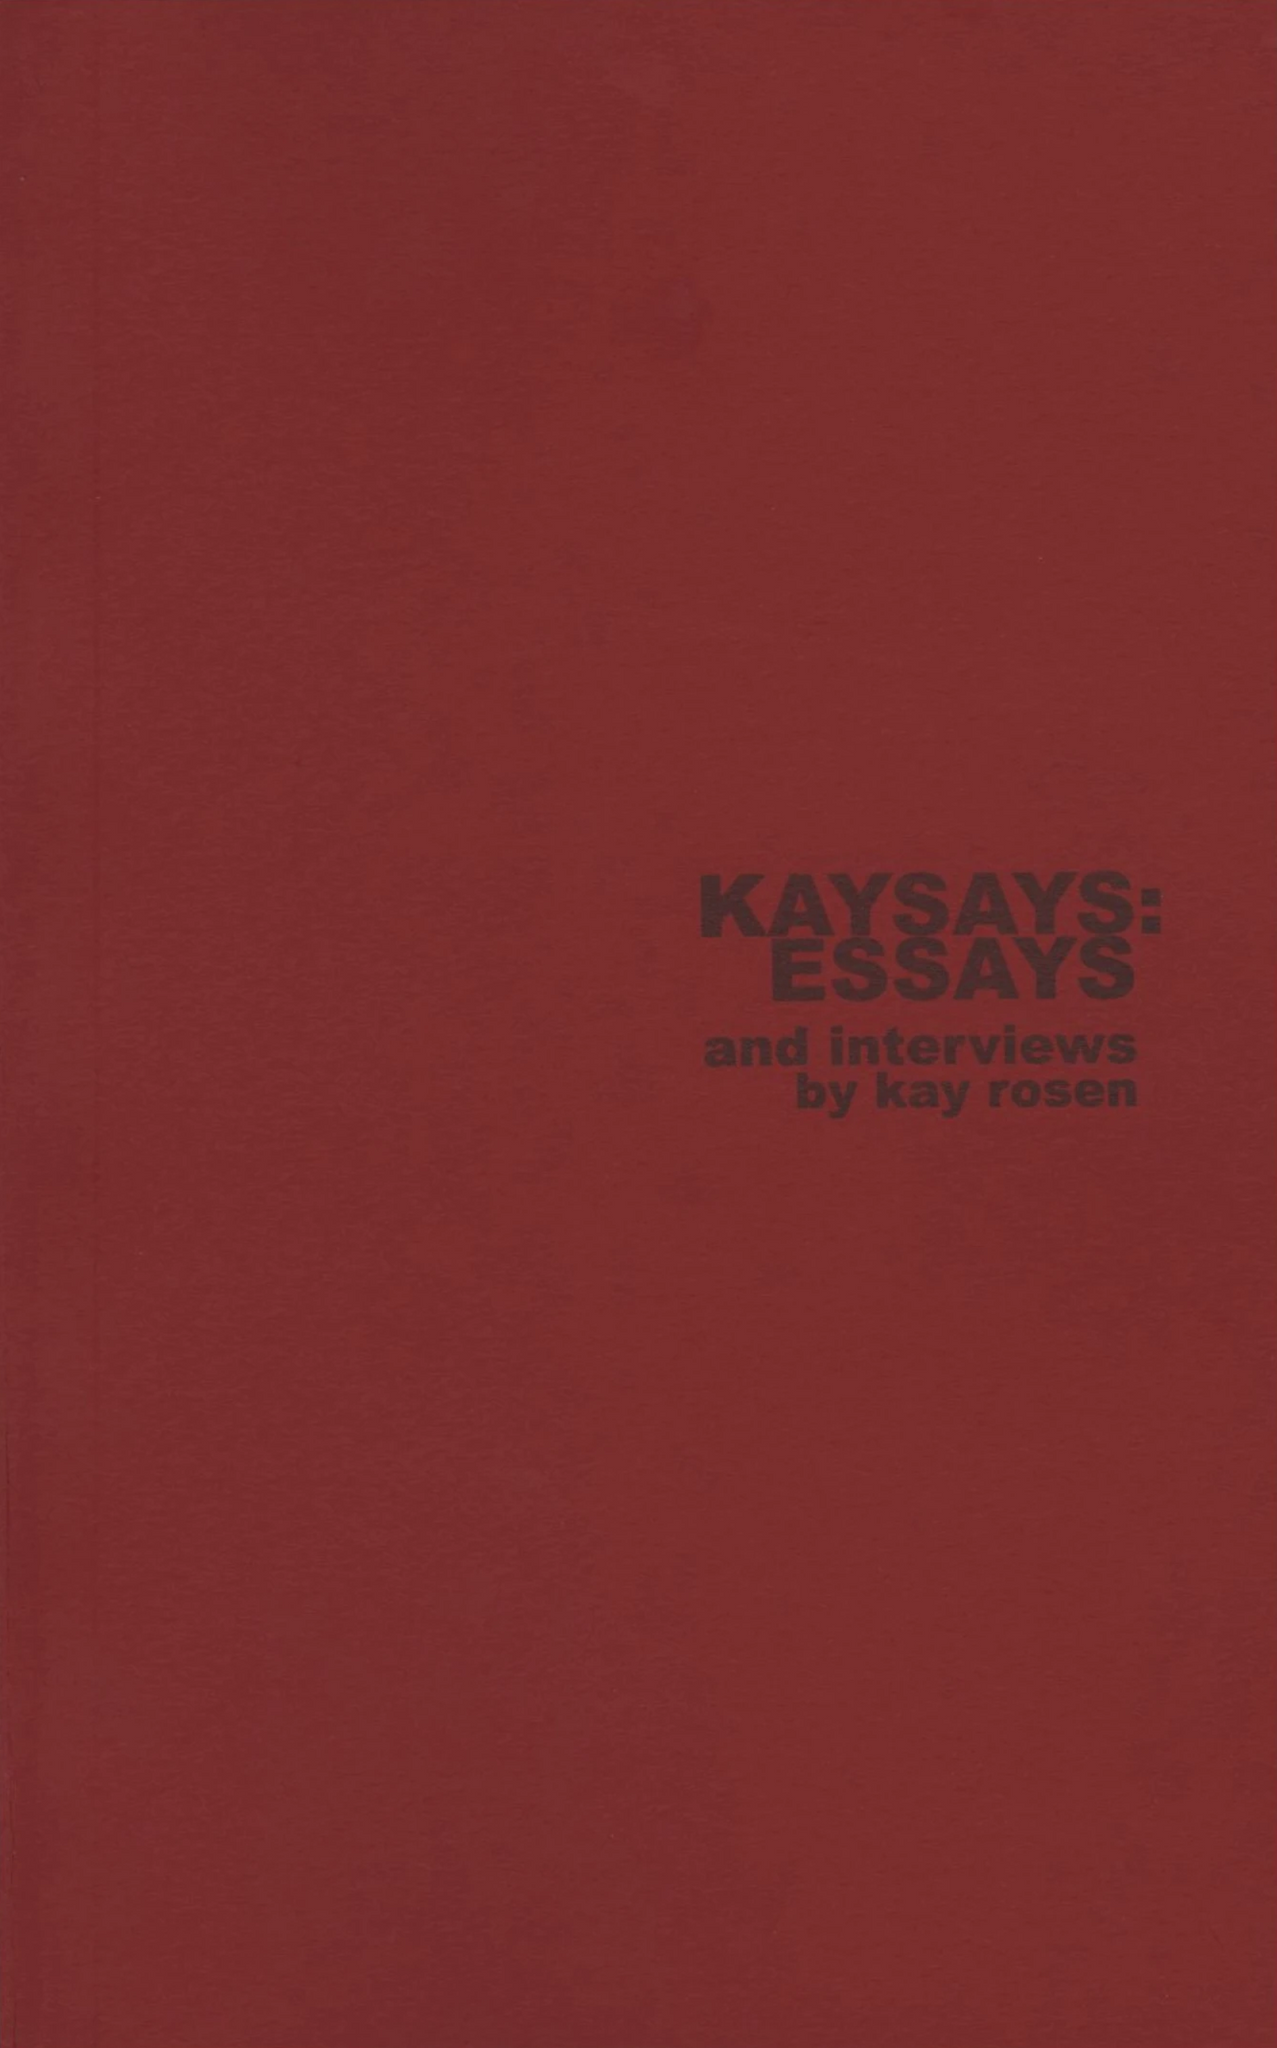 Kaysays: Essays and Interviews by Kay Rosen - Artist's Book at Kavi Gupta Editions